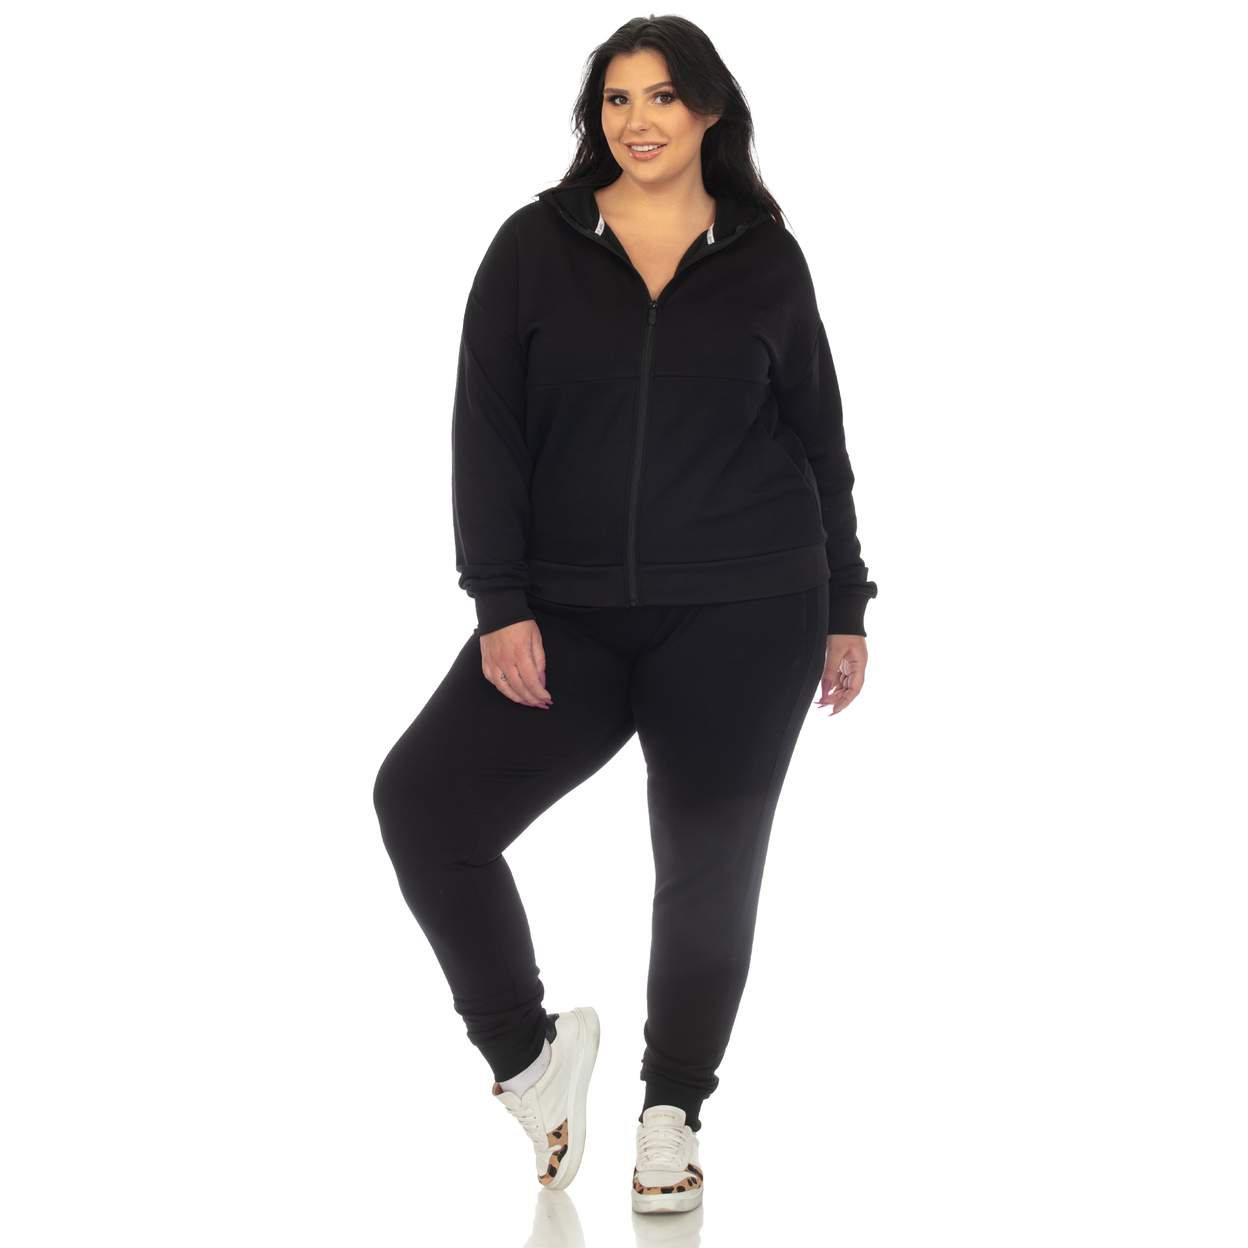 White Mark Women's 2-PC Fleece Sweatsuit Set - Black, 1x